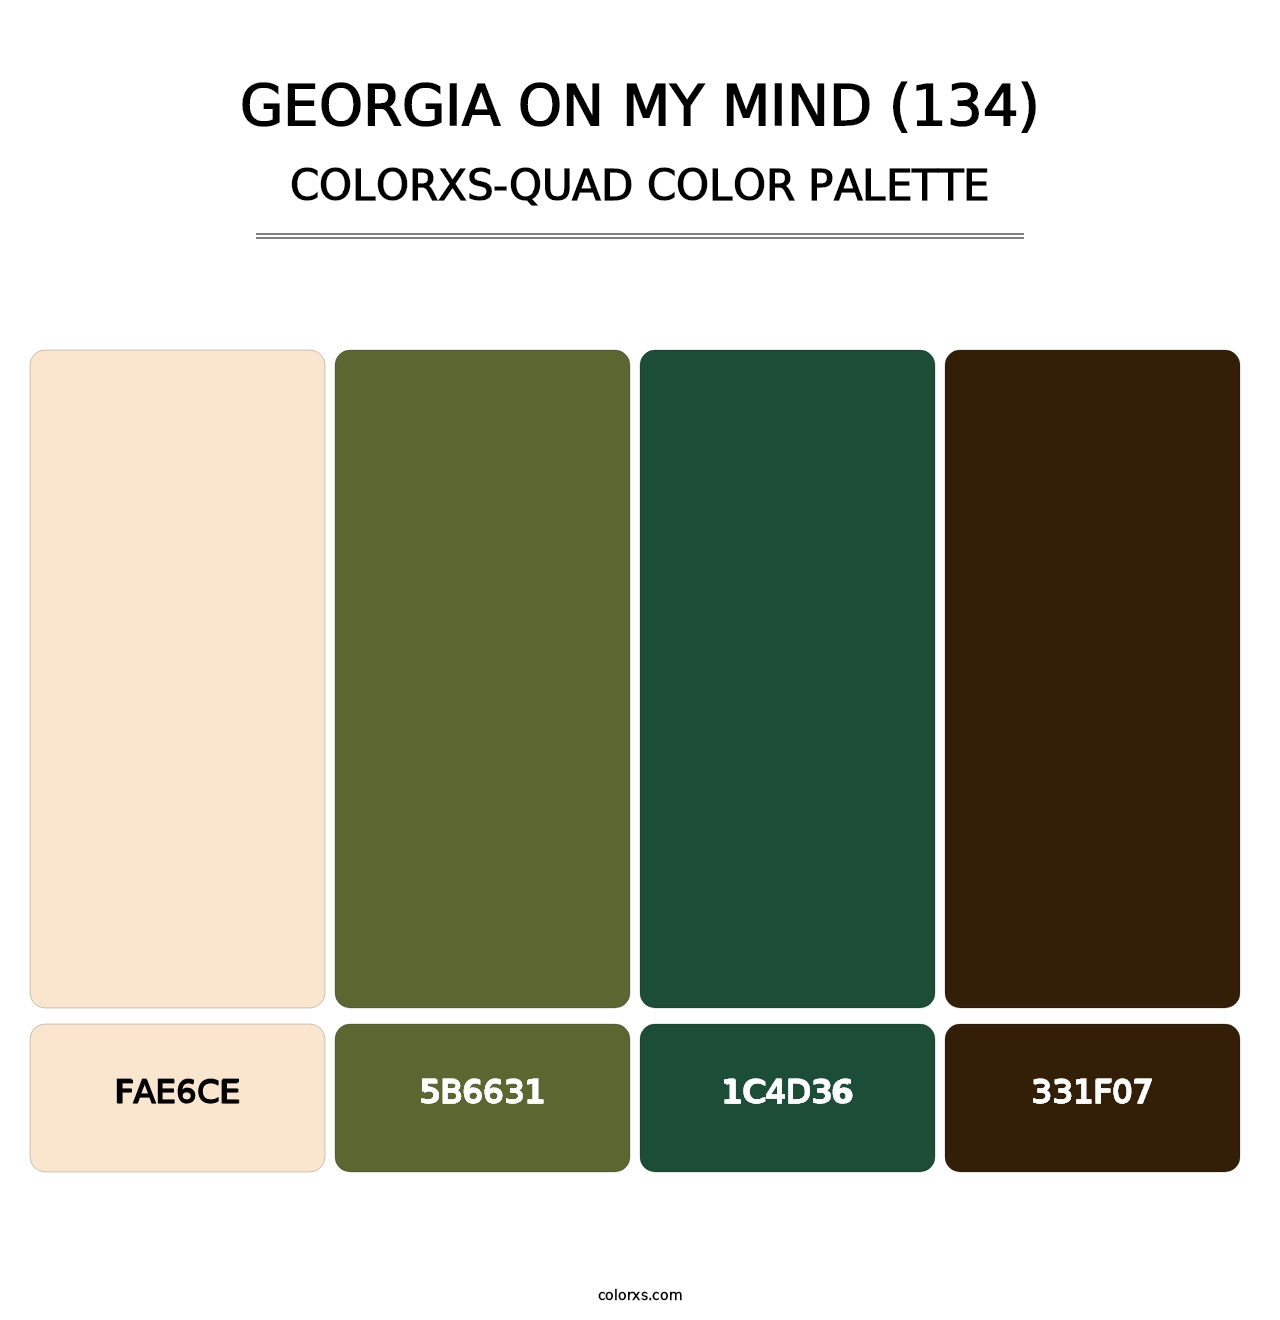 Georgia On My Mind (134) - Colorxs Quad Palette